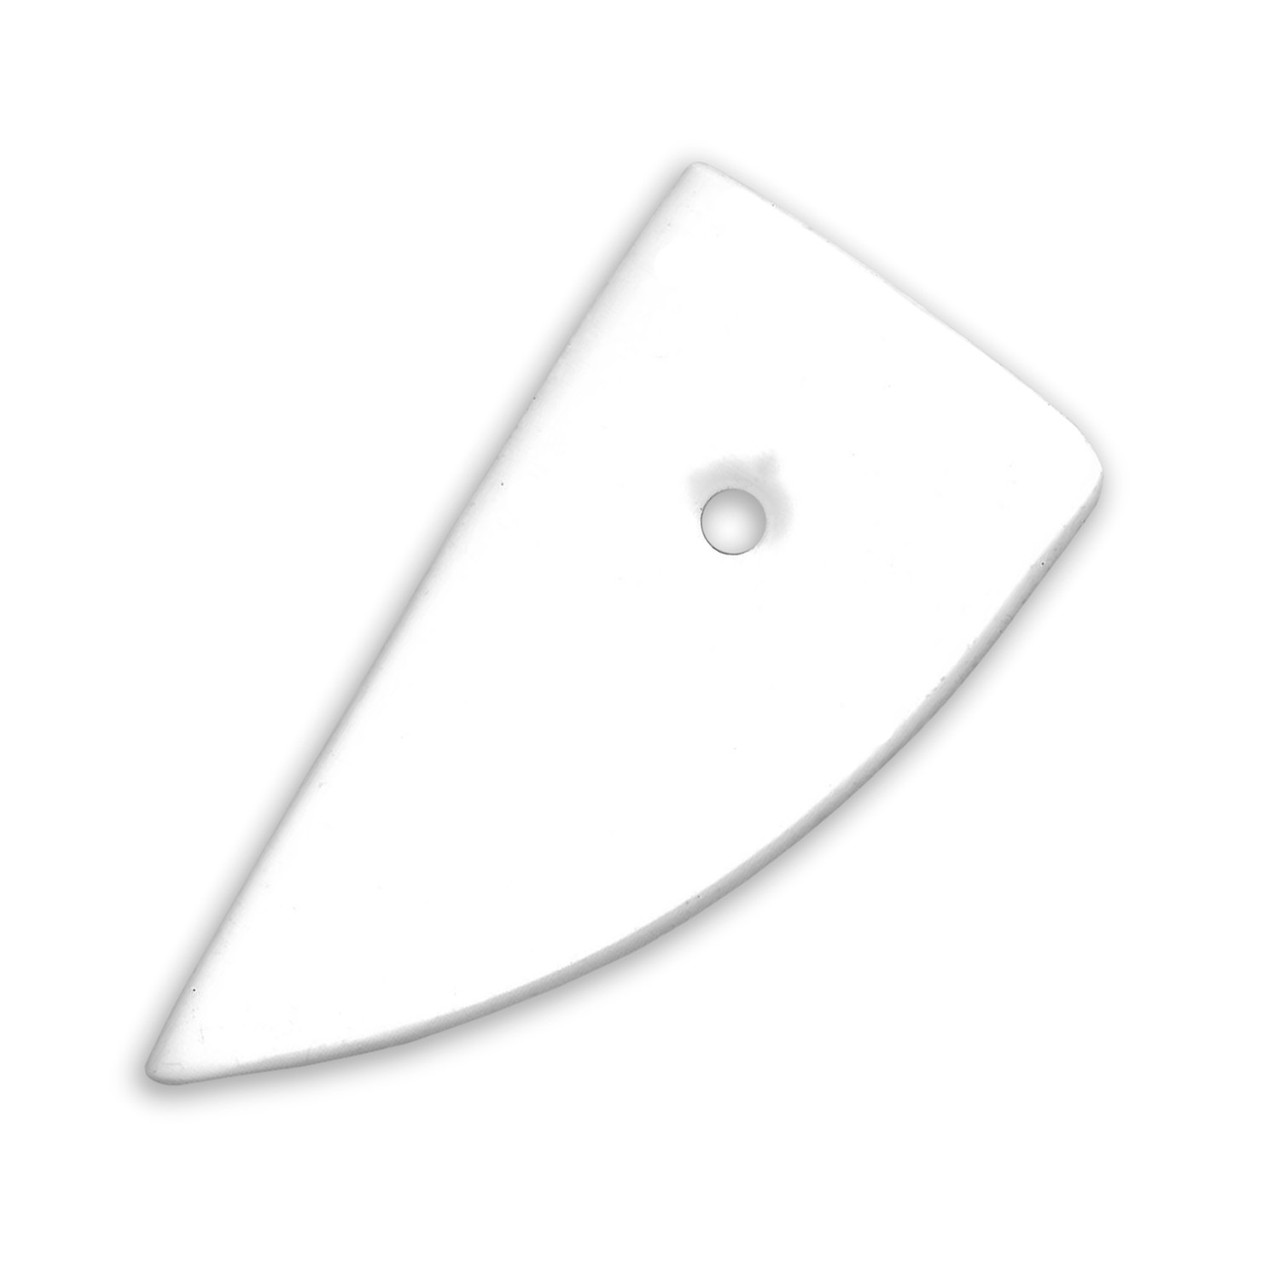 Lineco Bone Folder - Small